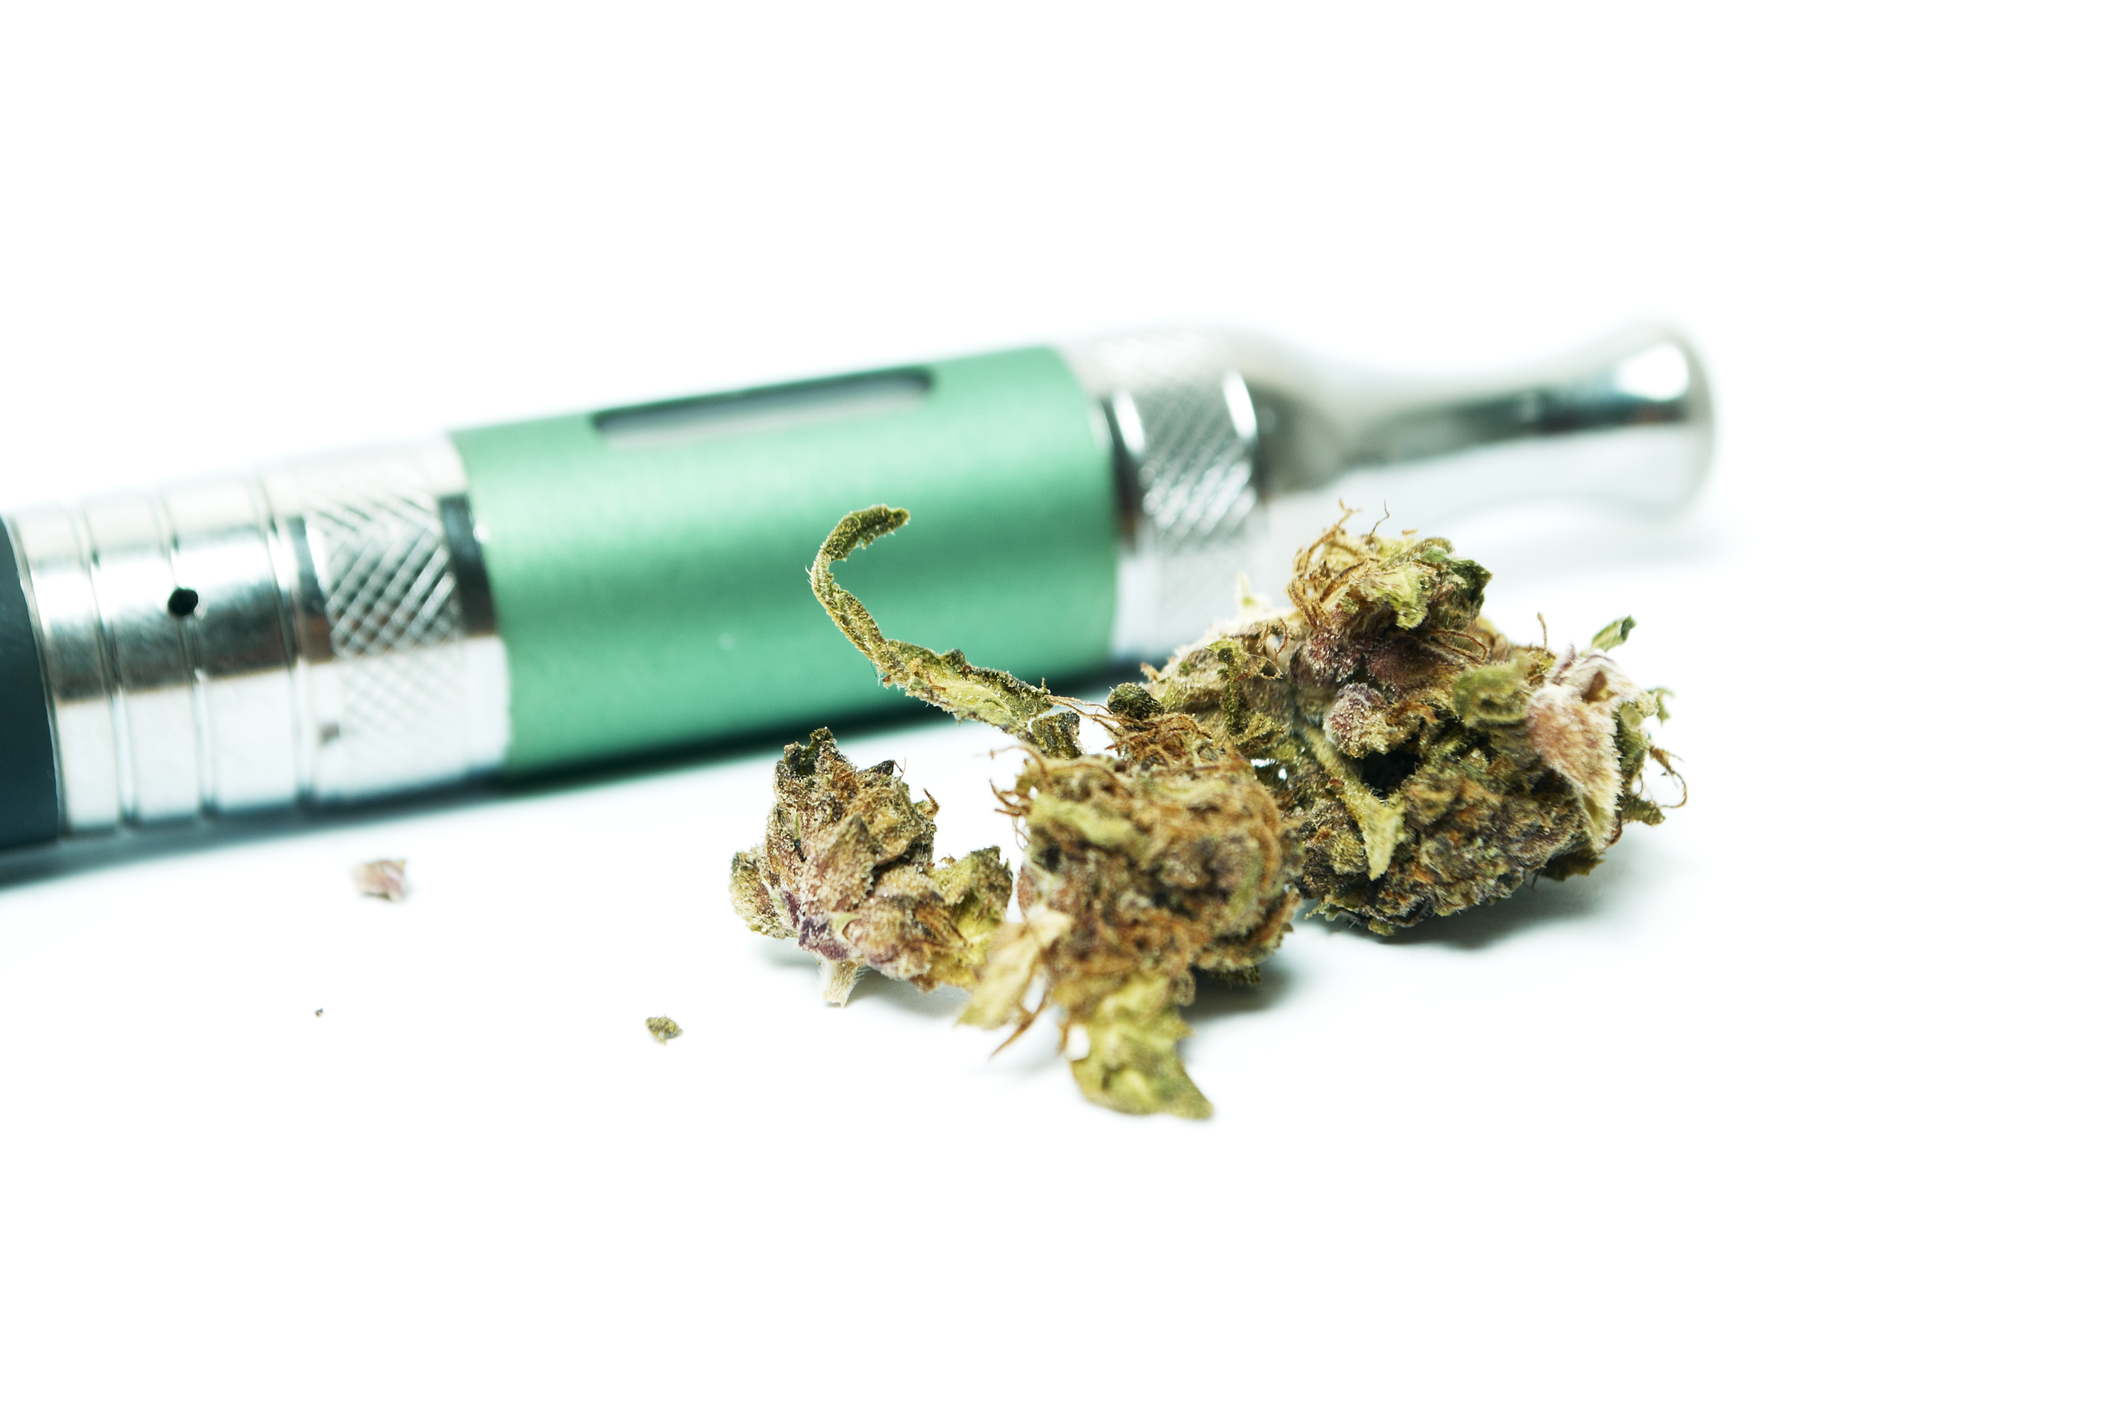  Legal Marijuana Sales Growing After EVALI Declines